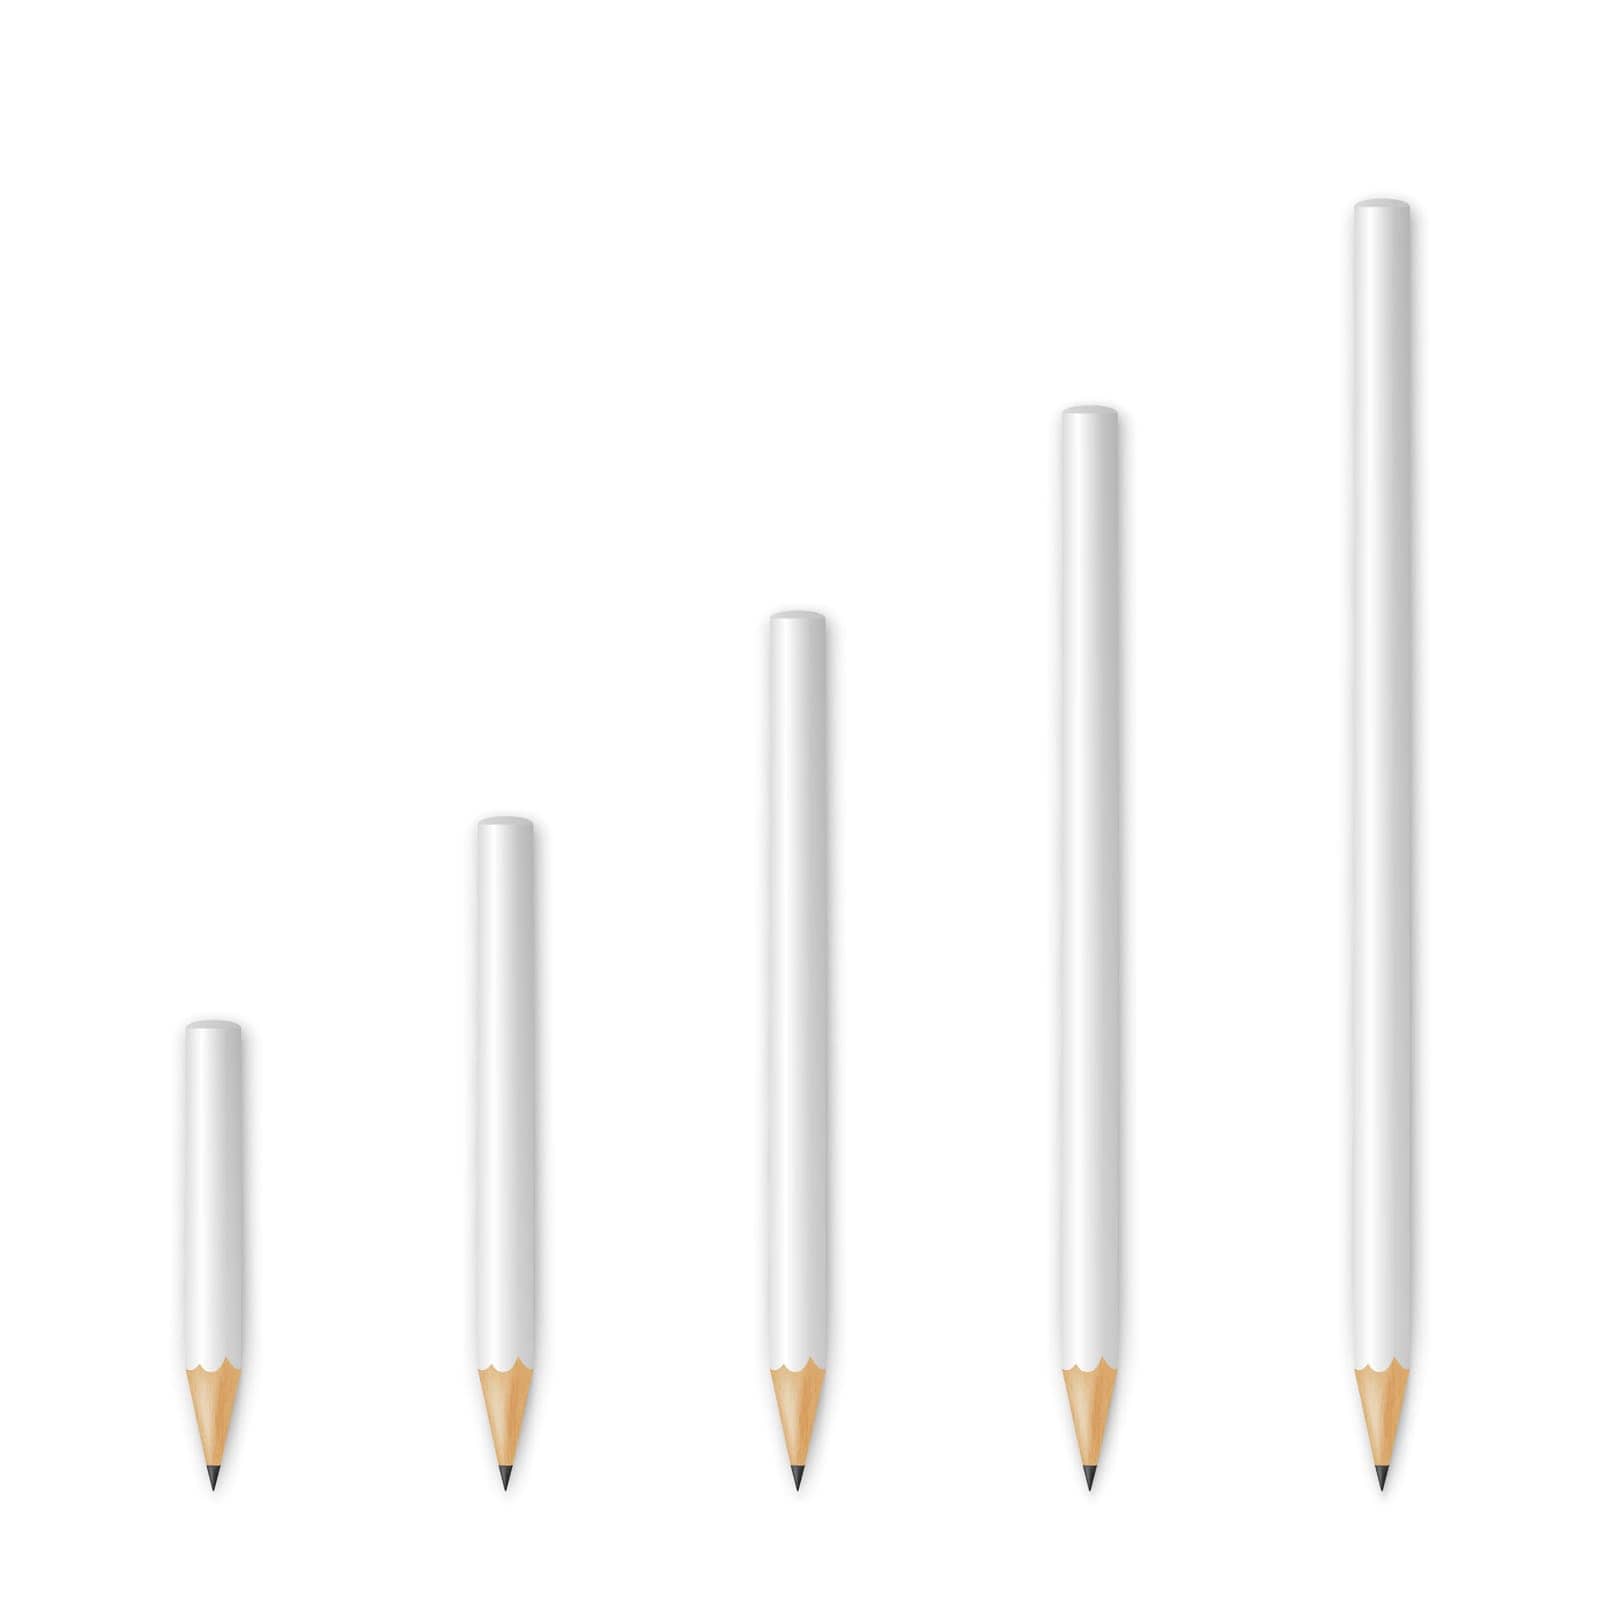 White wooden sharp pencils by Gomolach